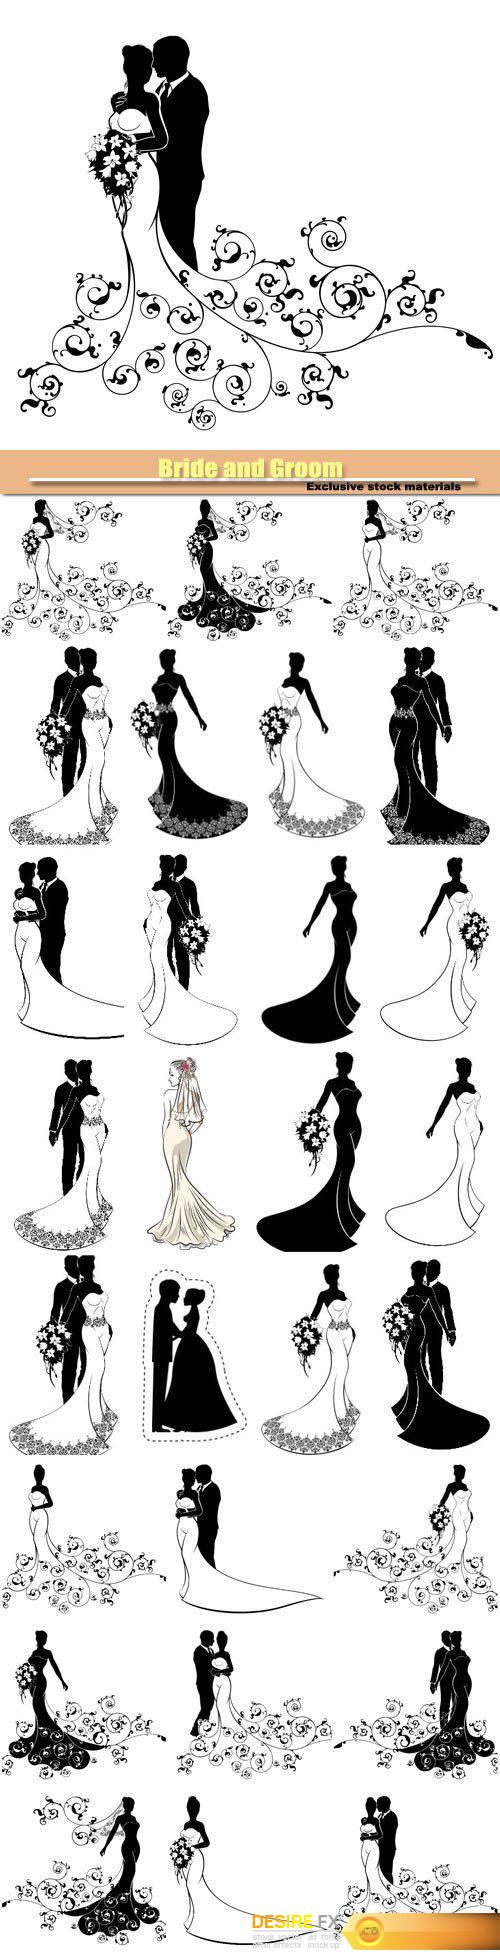 Bride and Groom, wedding silhouette vector set